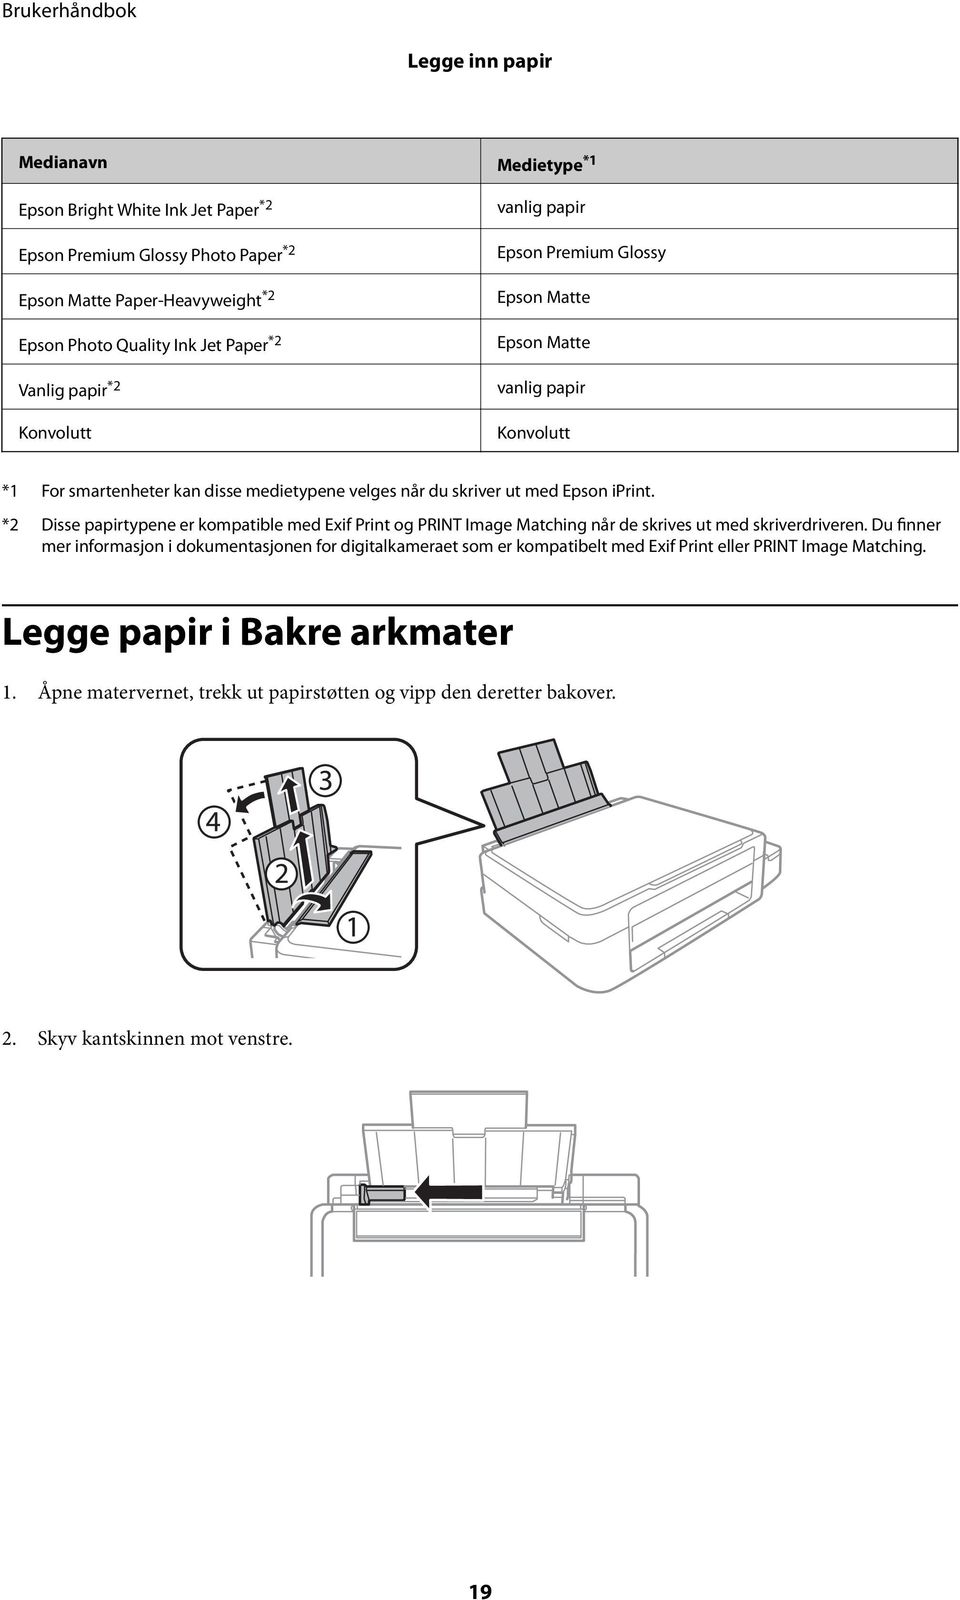 *2 Disse papirtypene er kompatible med Exif Print og PRINT Image Matching når de skrives ut med skriverdriveren.